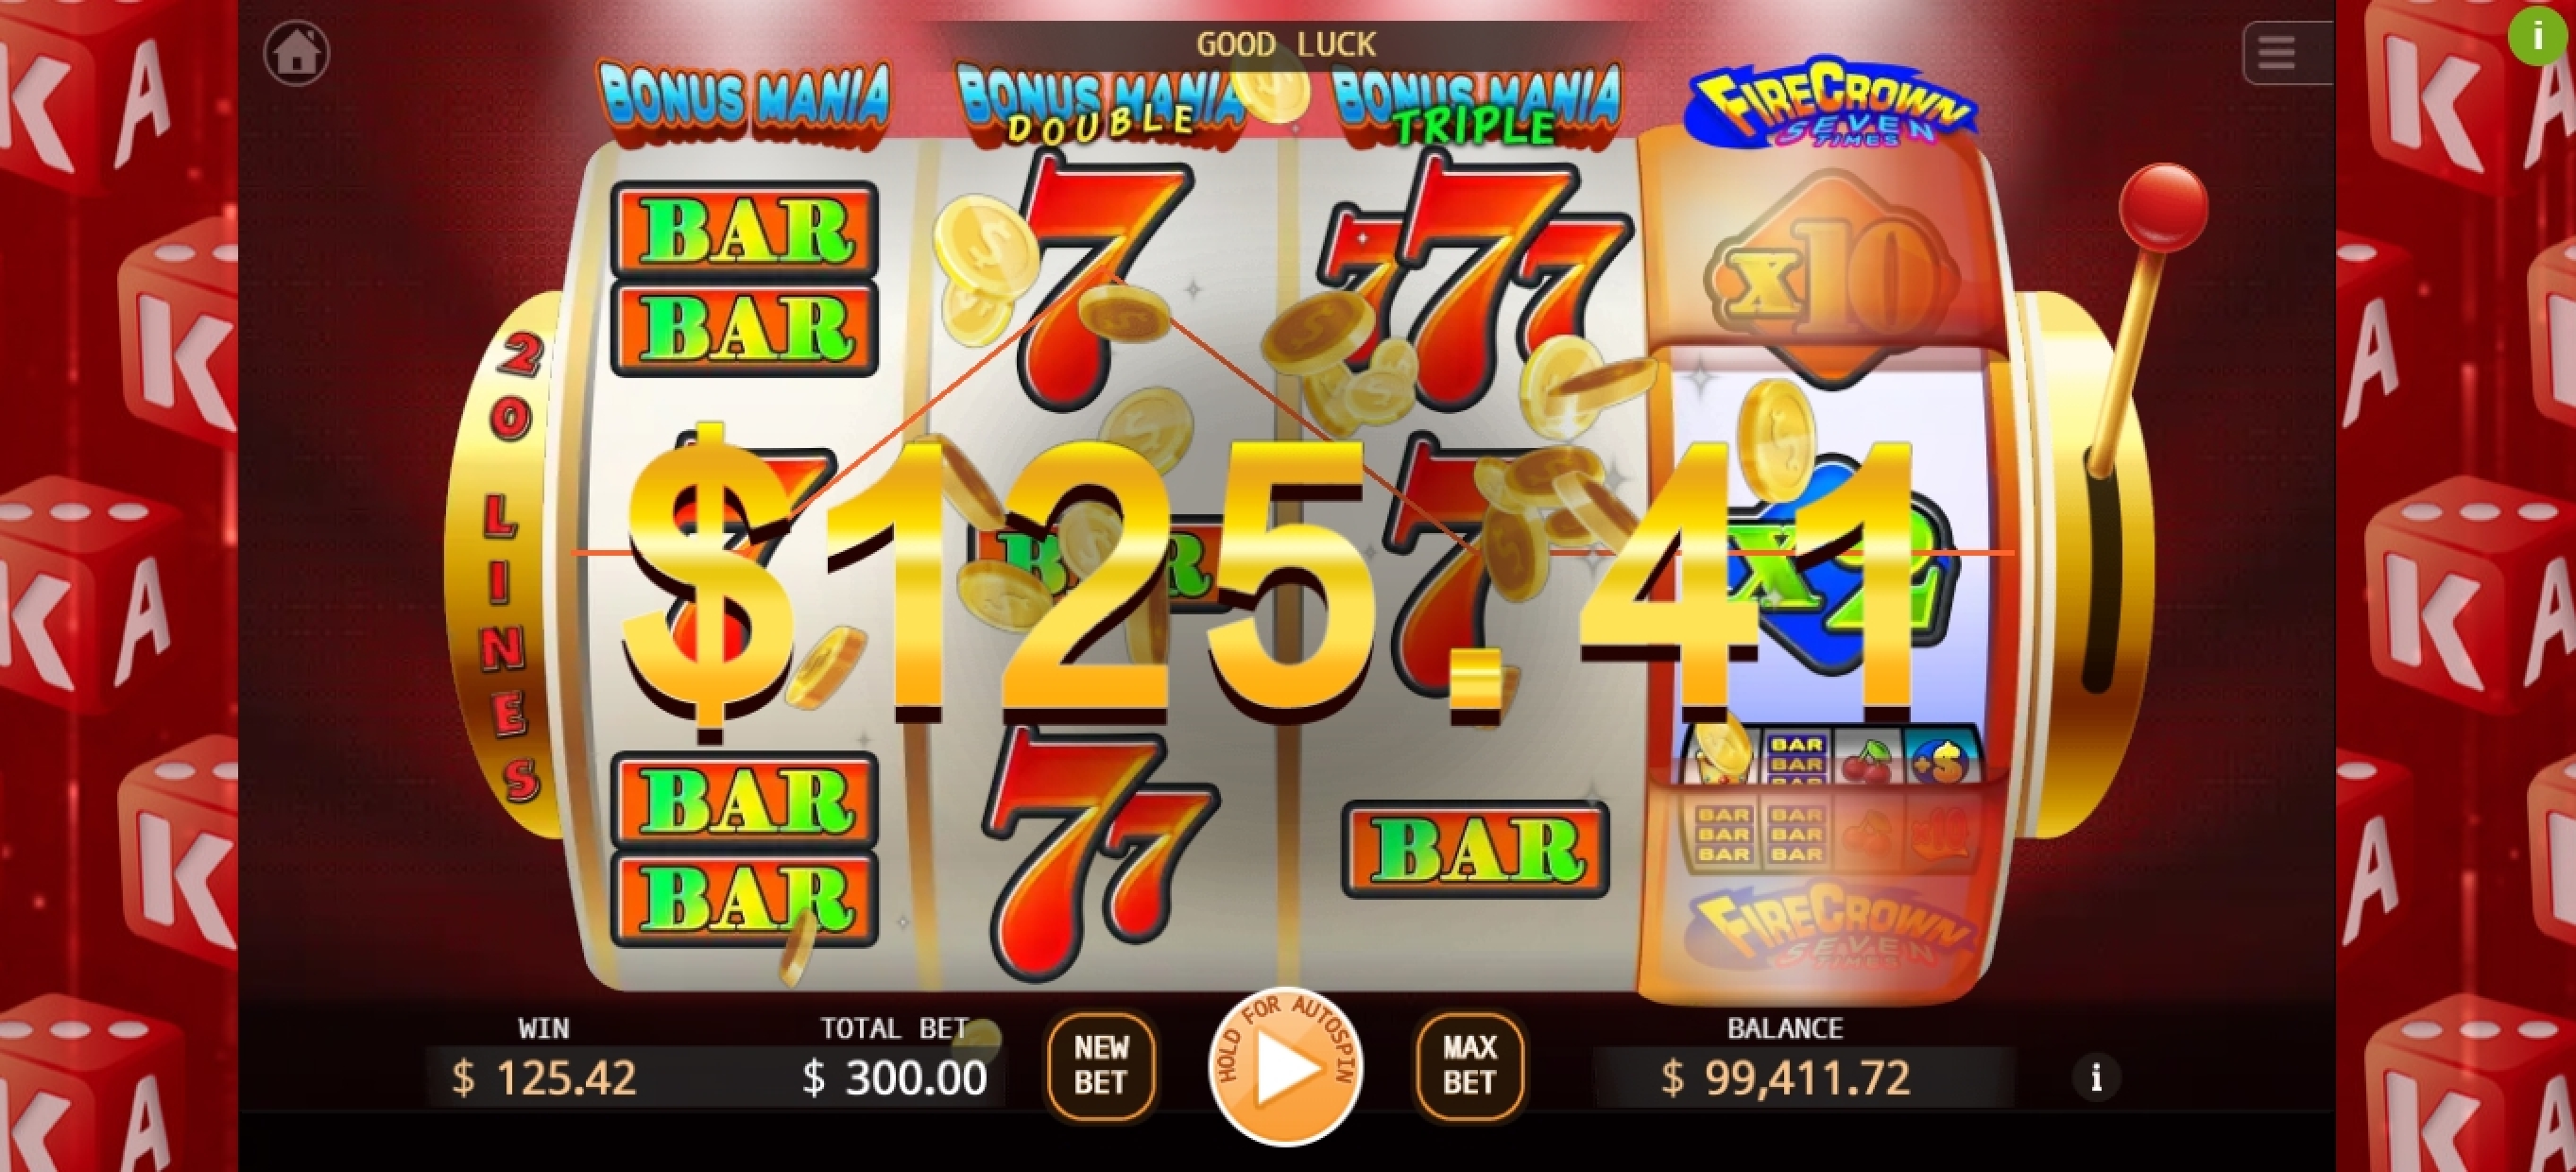 Win Money in Super Bonus Mania Free Slot Game by KA Gaming